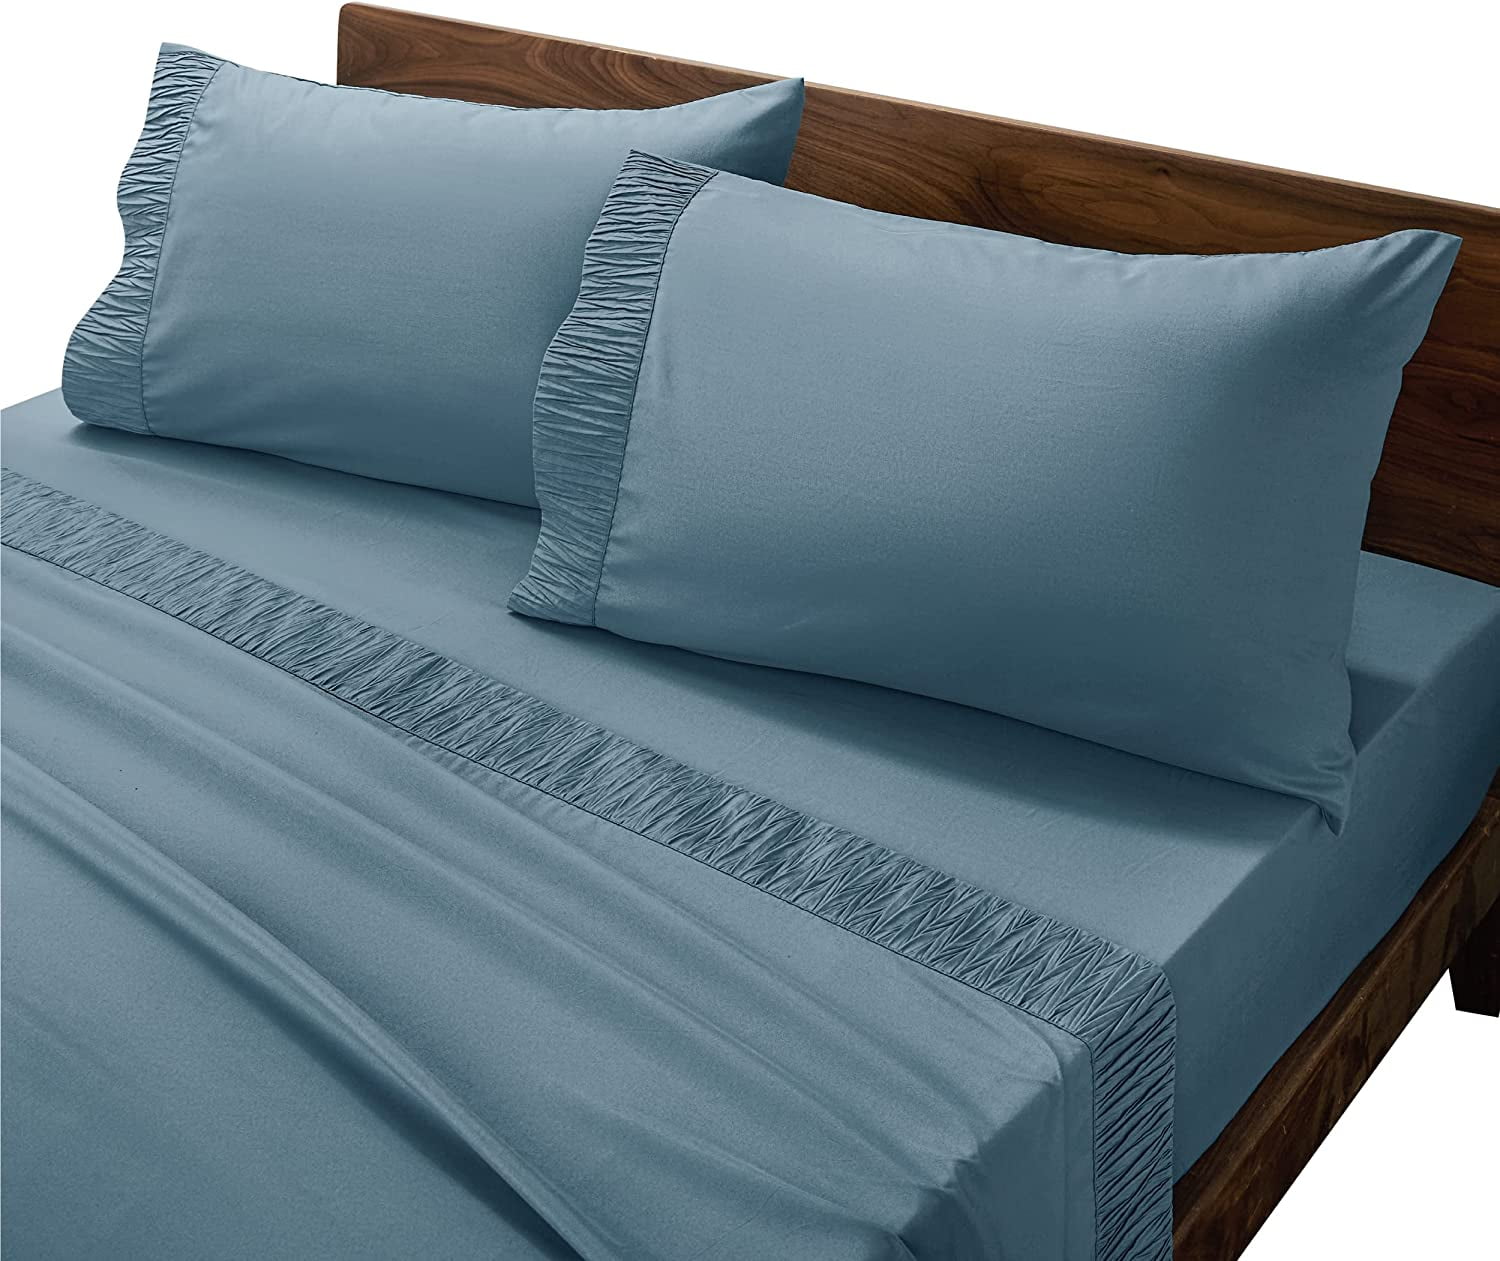 Bedsure Bed Sheet Set - Ruffled Embossed Navy Blue Bed Sheets